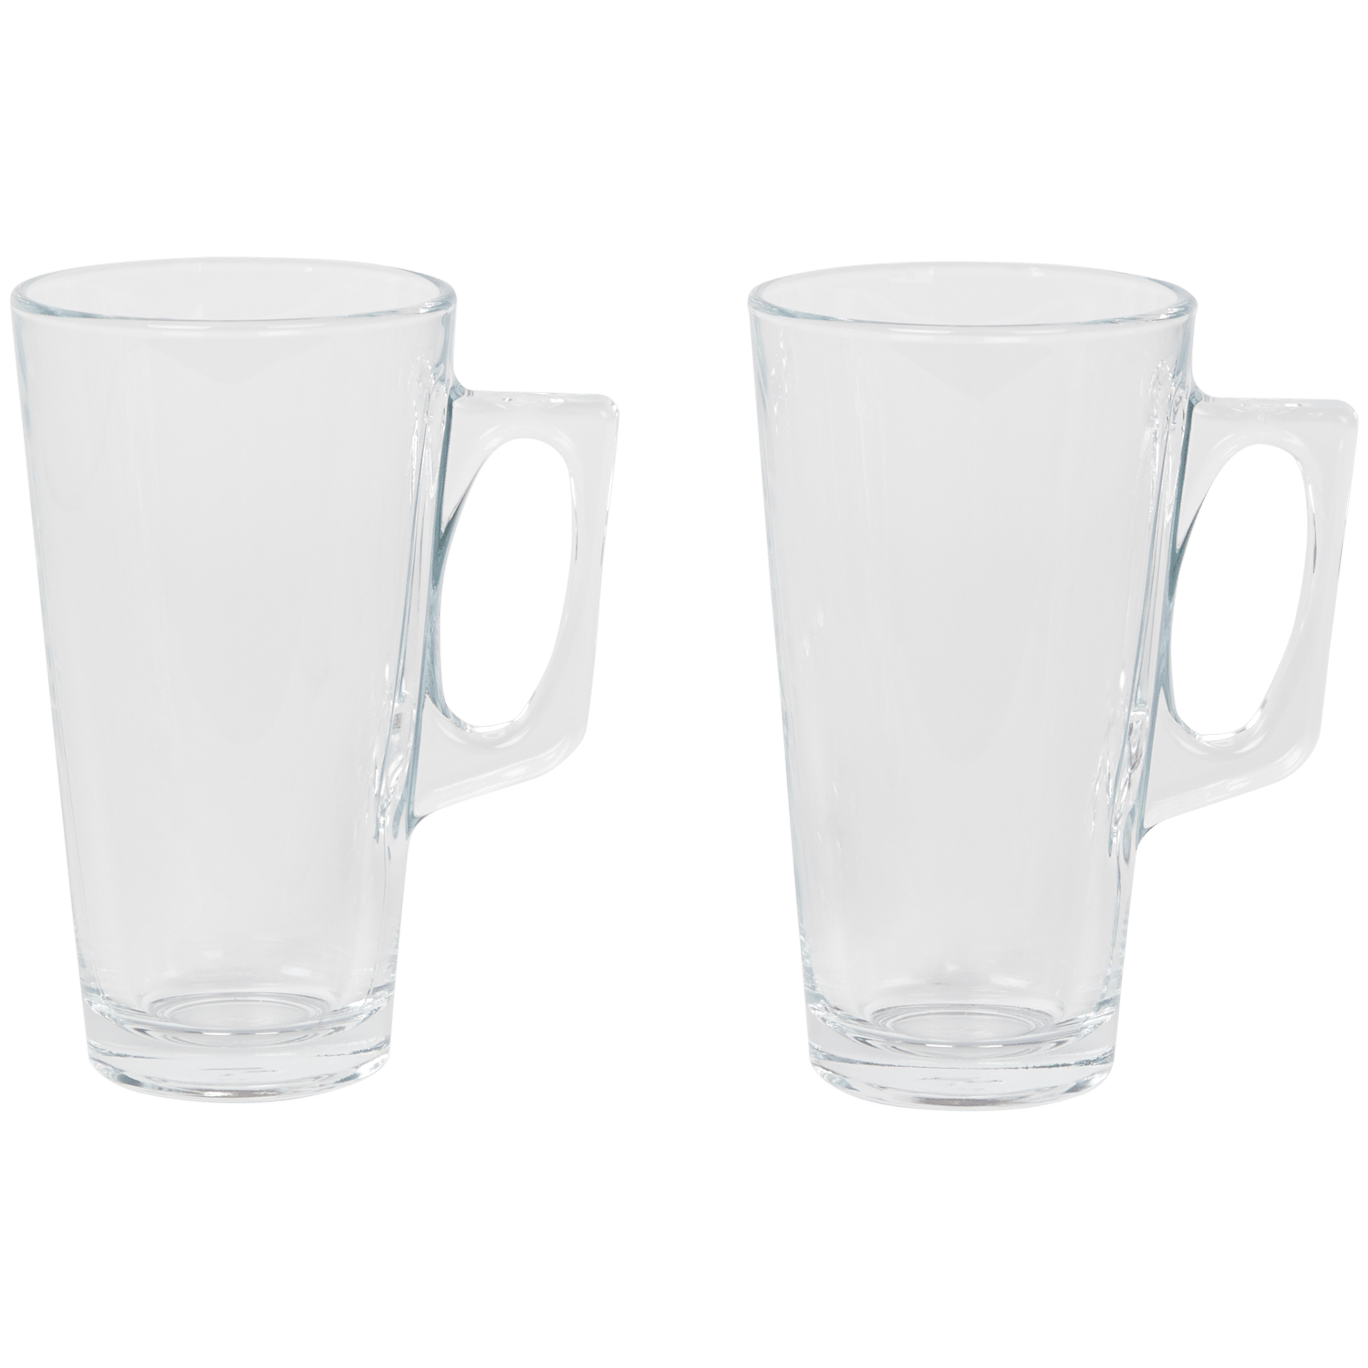 COM-FOUR® 2x Verre latte Macchiato - verres latte macchiato avec